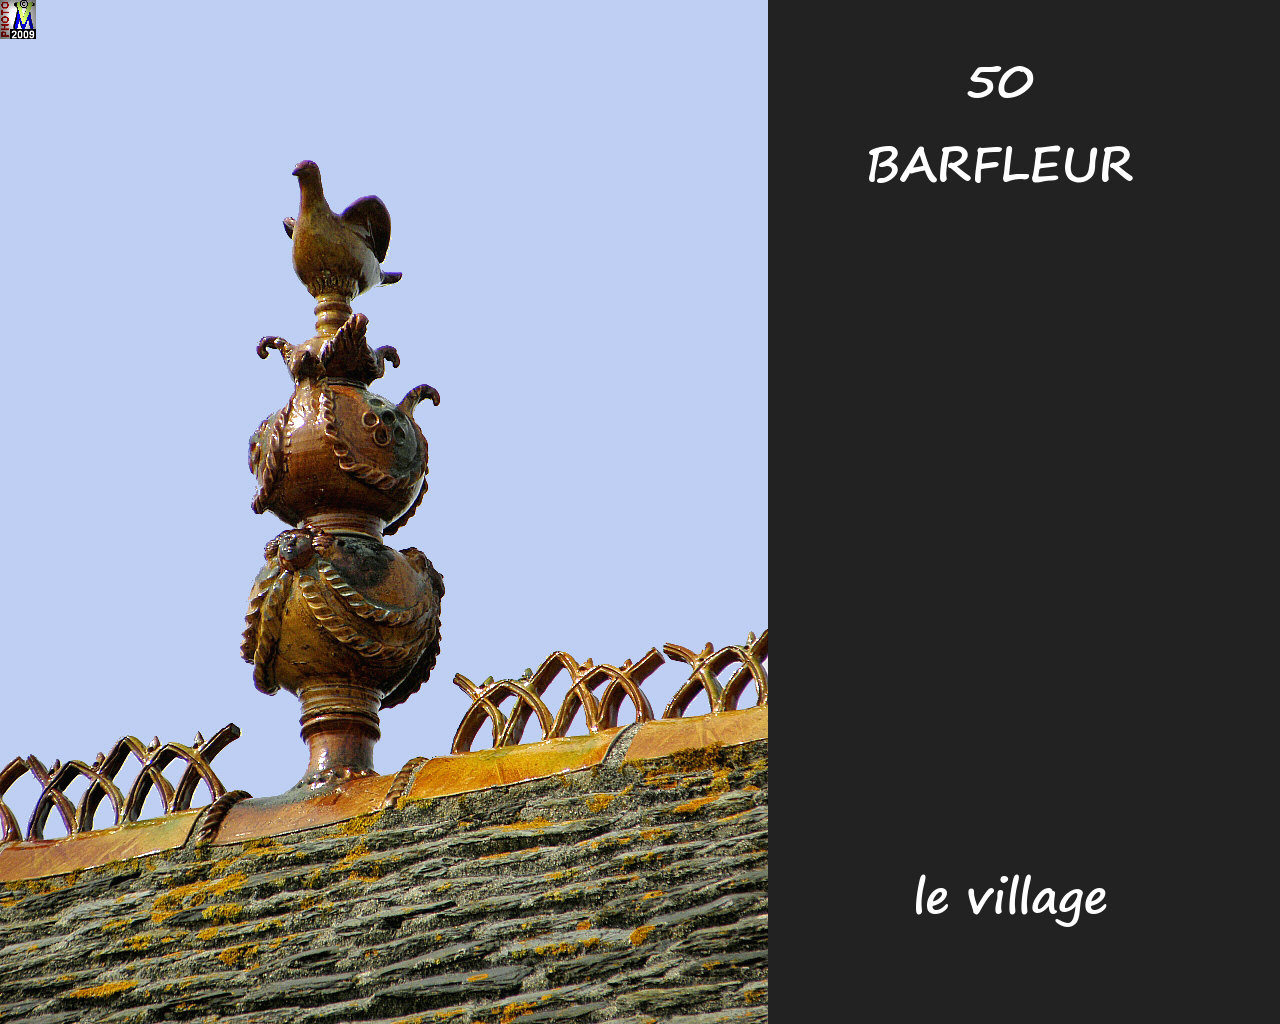 50BARFLEUR_village_110.jpg